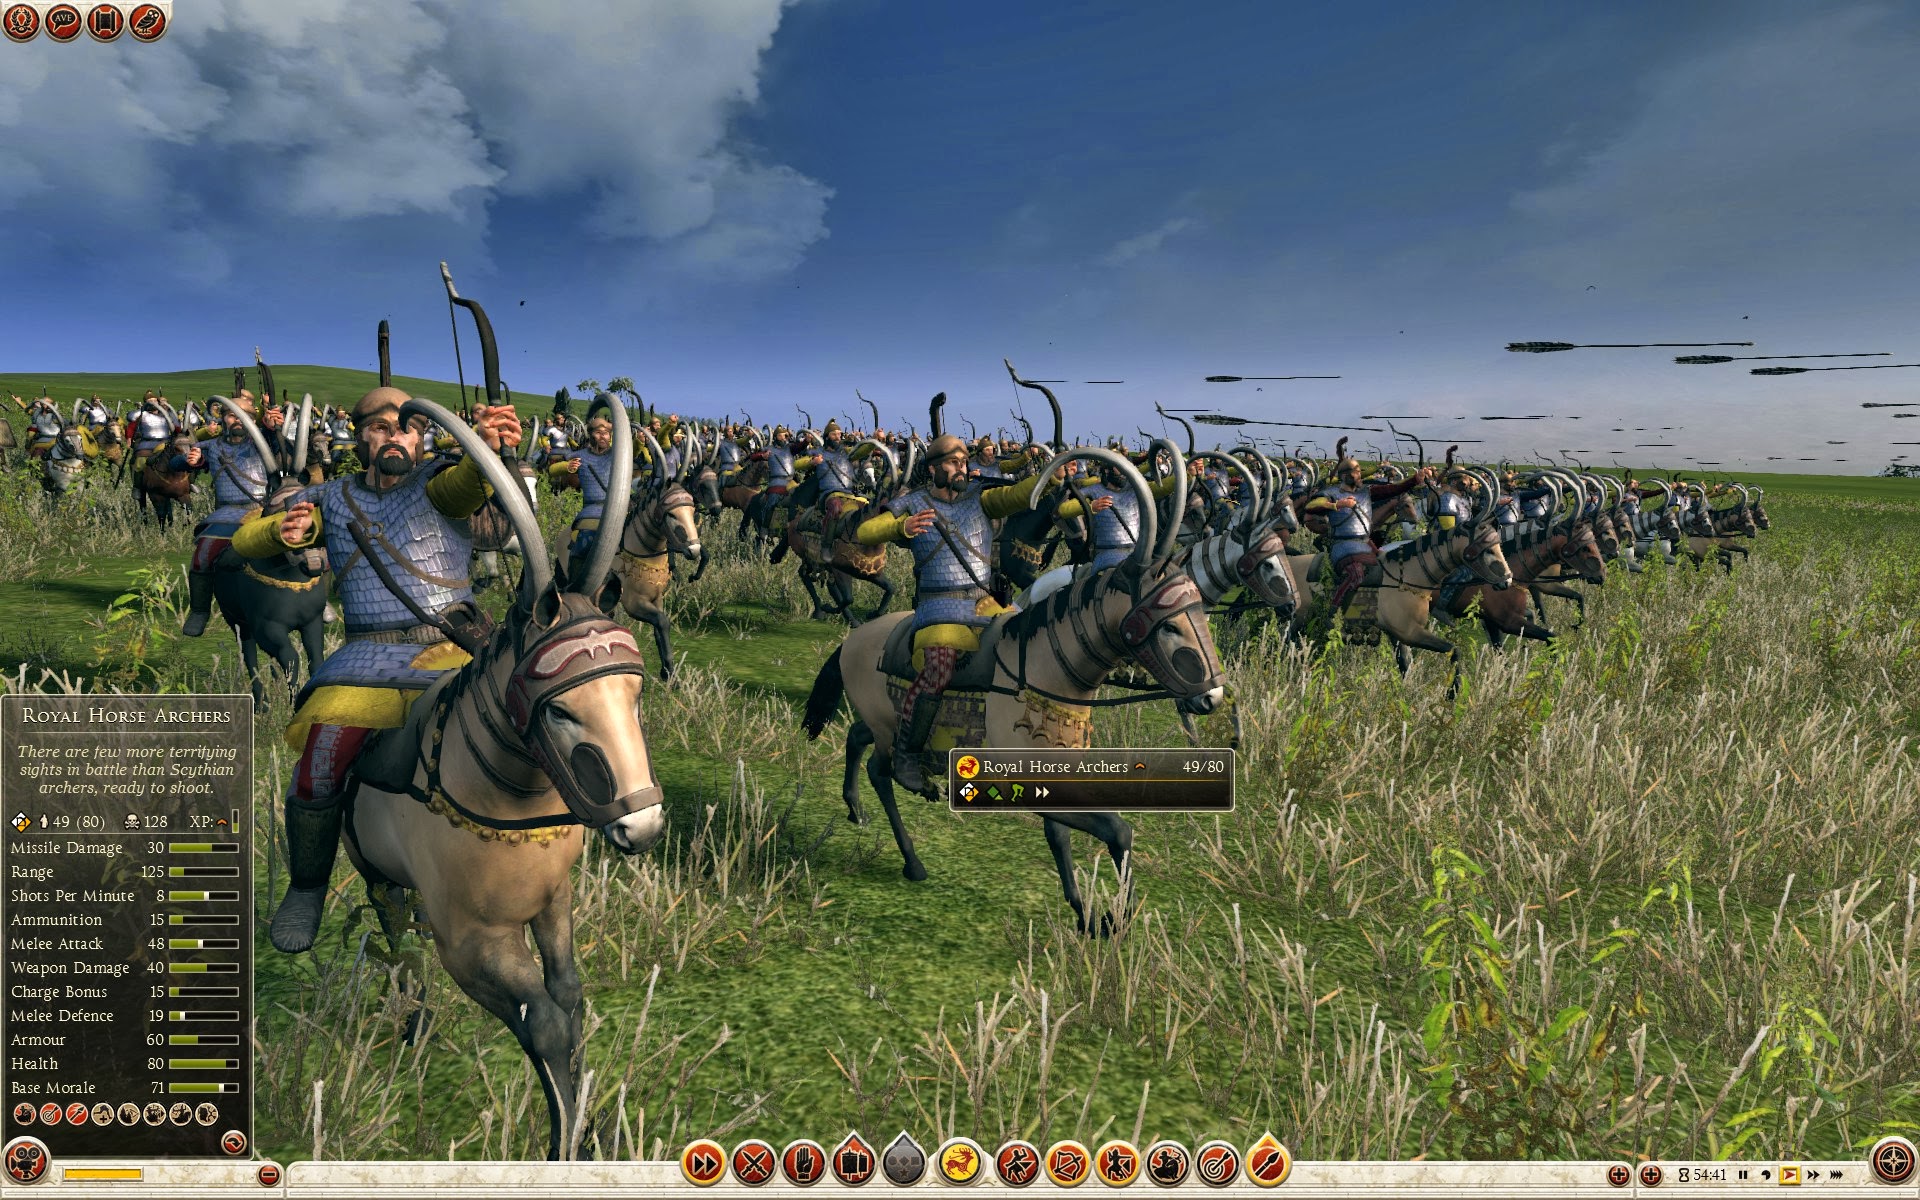 Royal Horse Archers